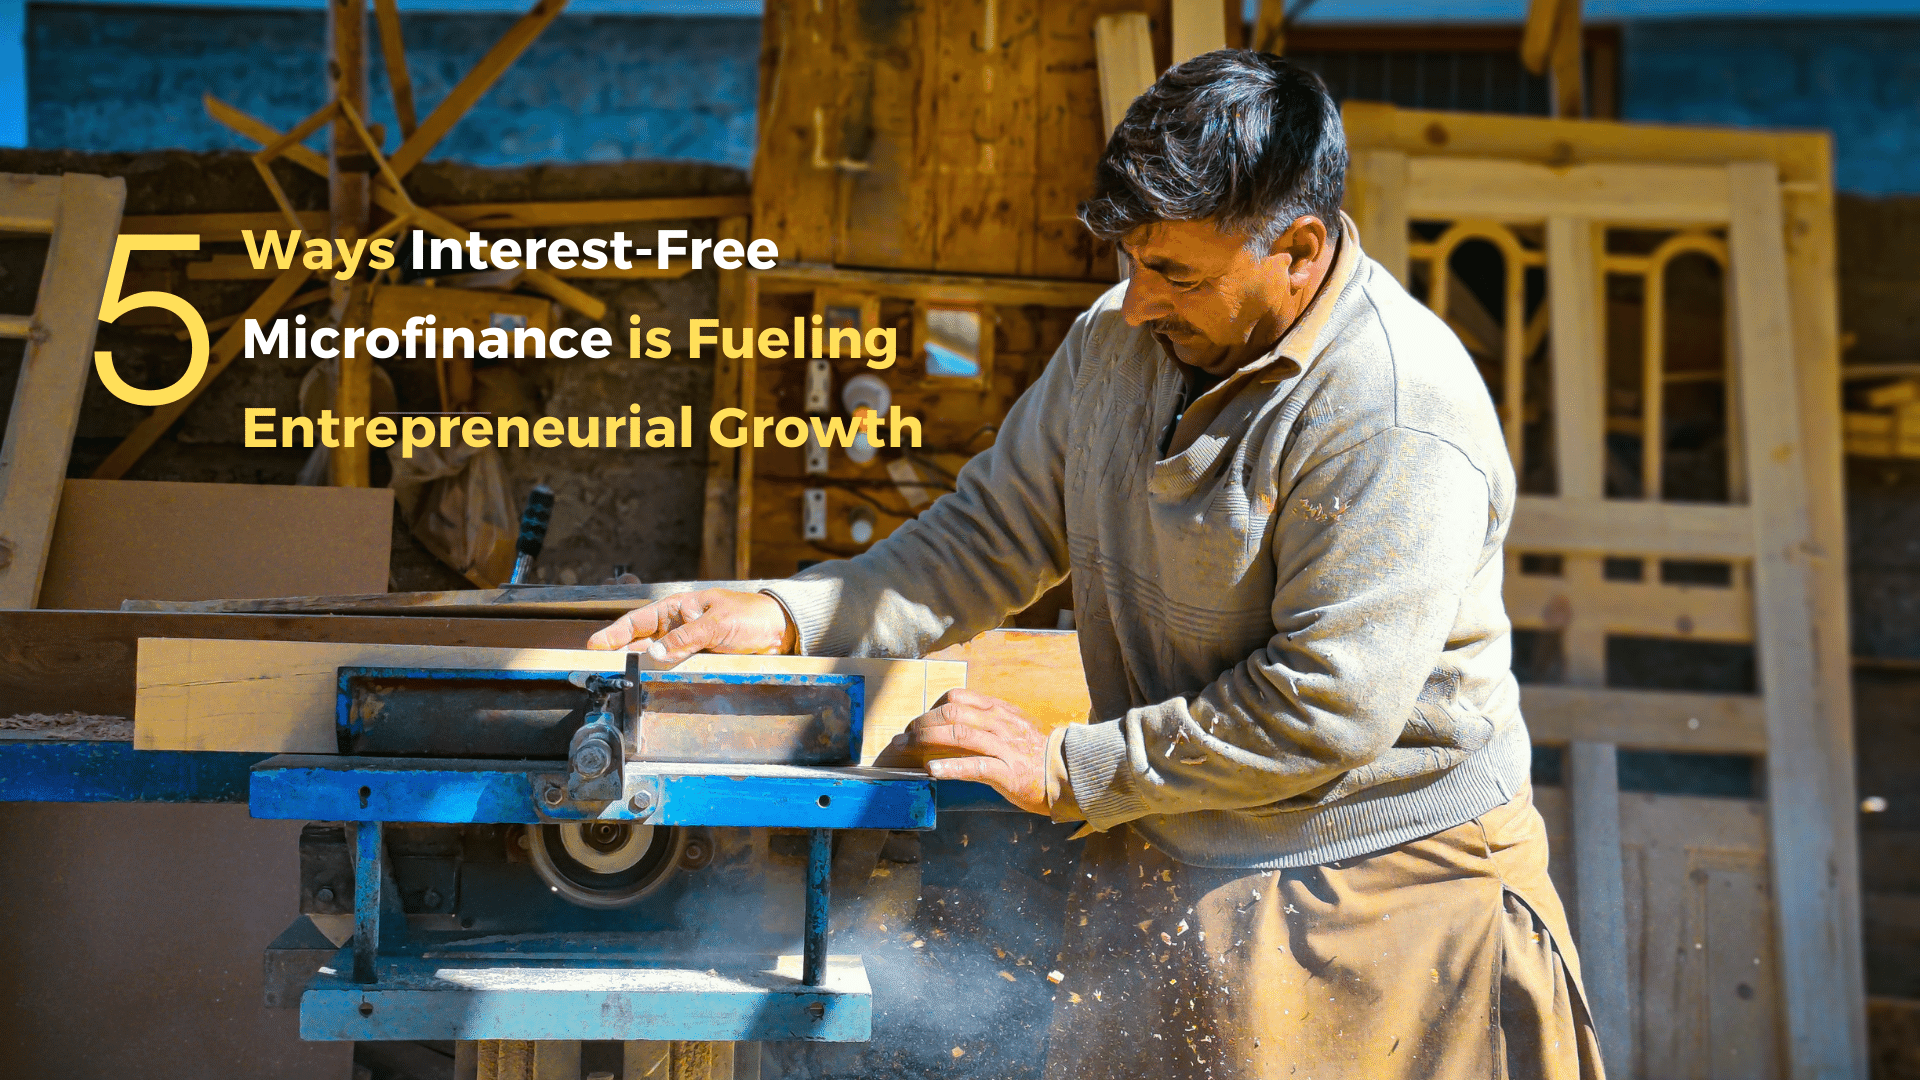 interest-free microfinance helping men and women start micro-business